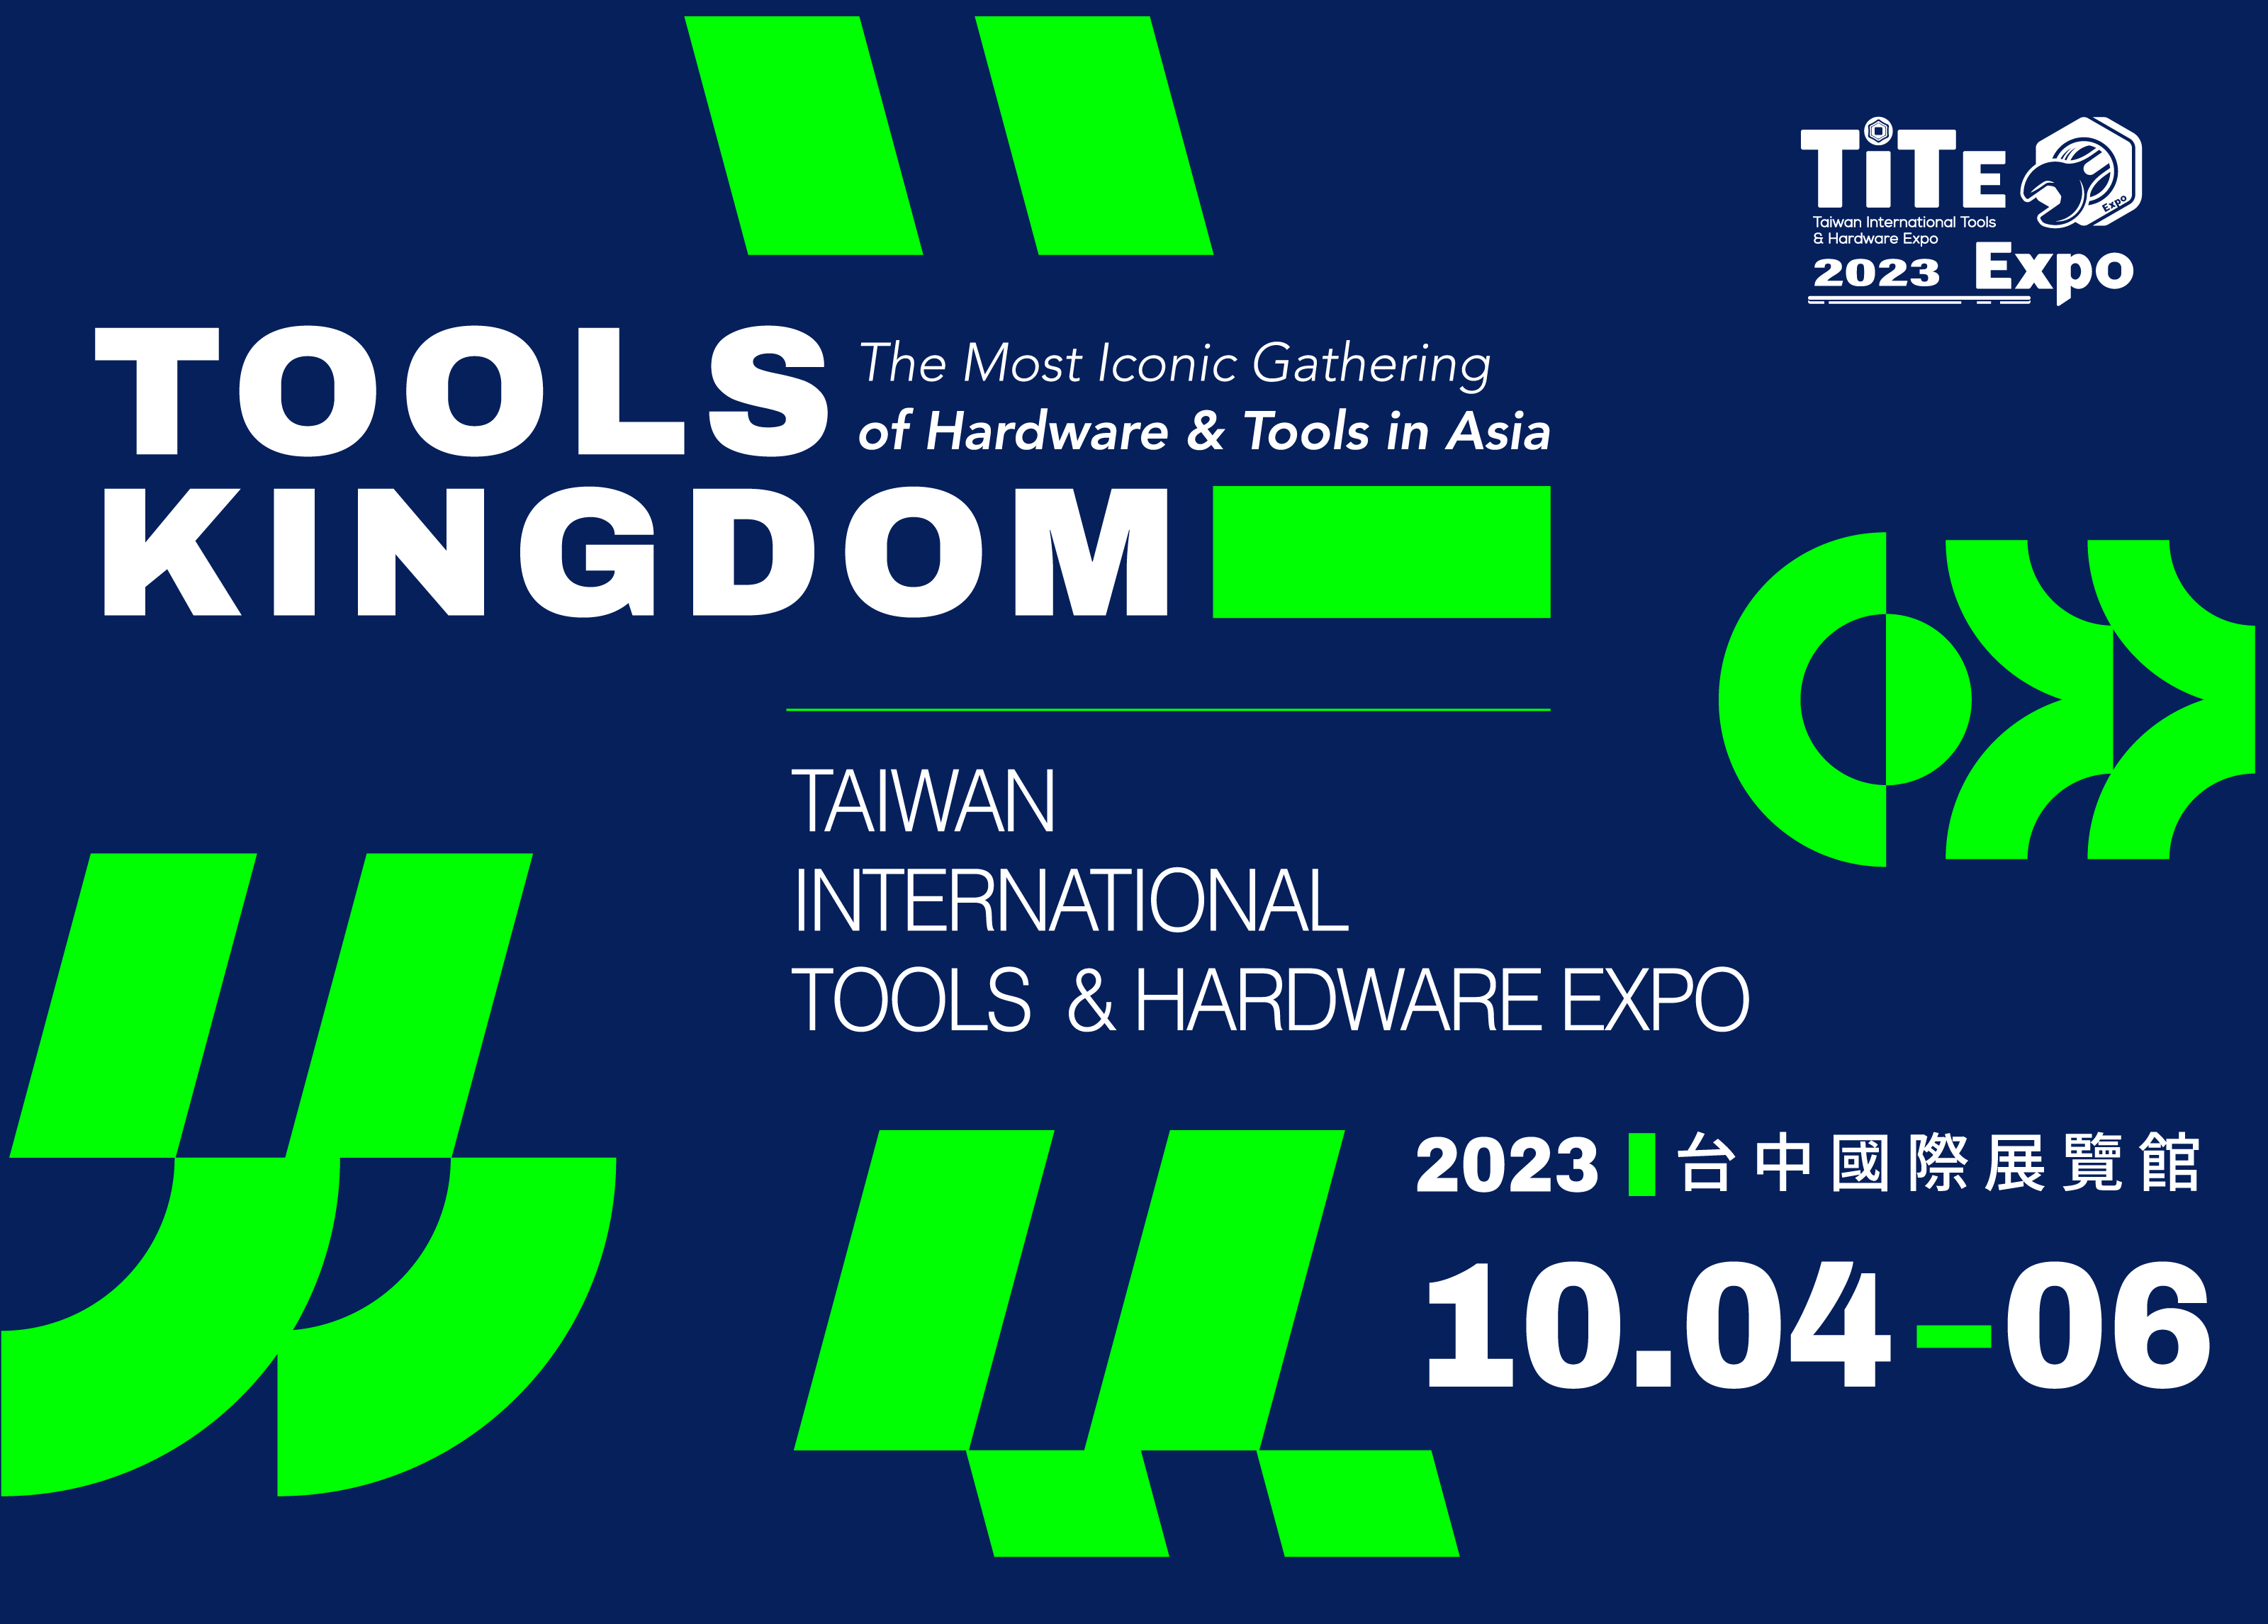 TAIWAN INTERNATIONAL TOOLS & HARDWARE EXPO 2023